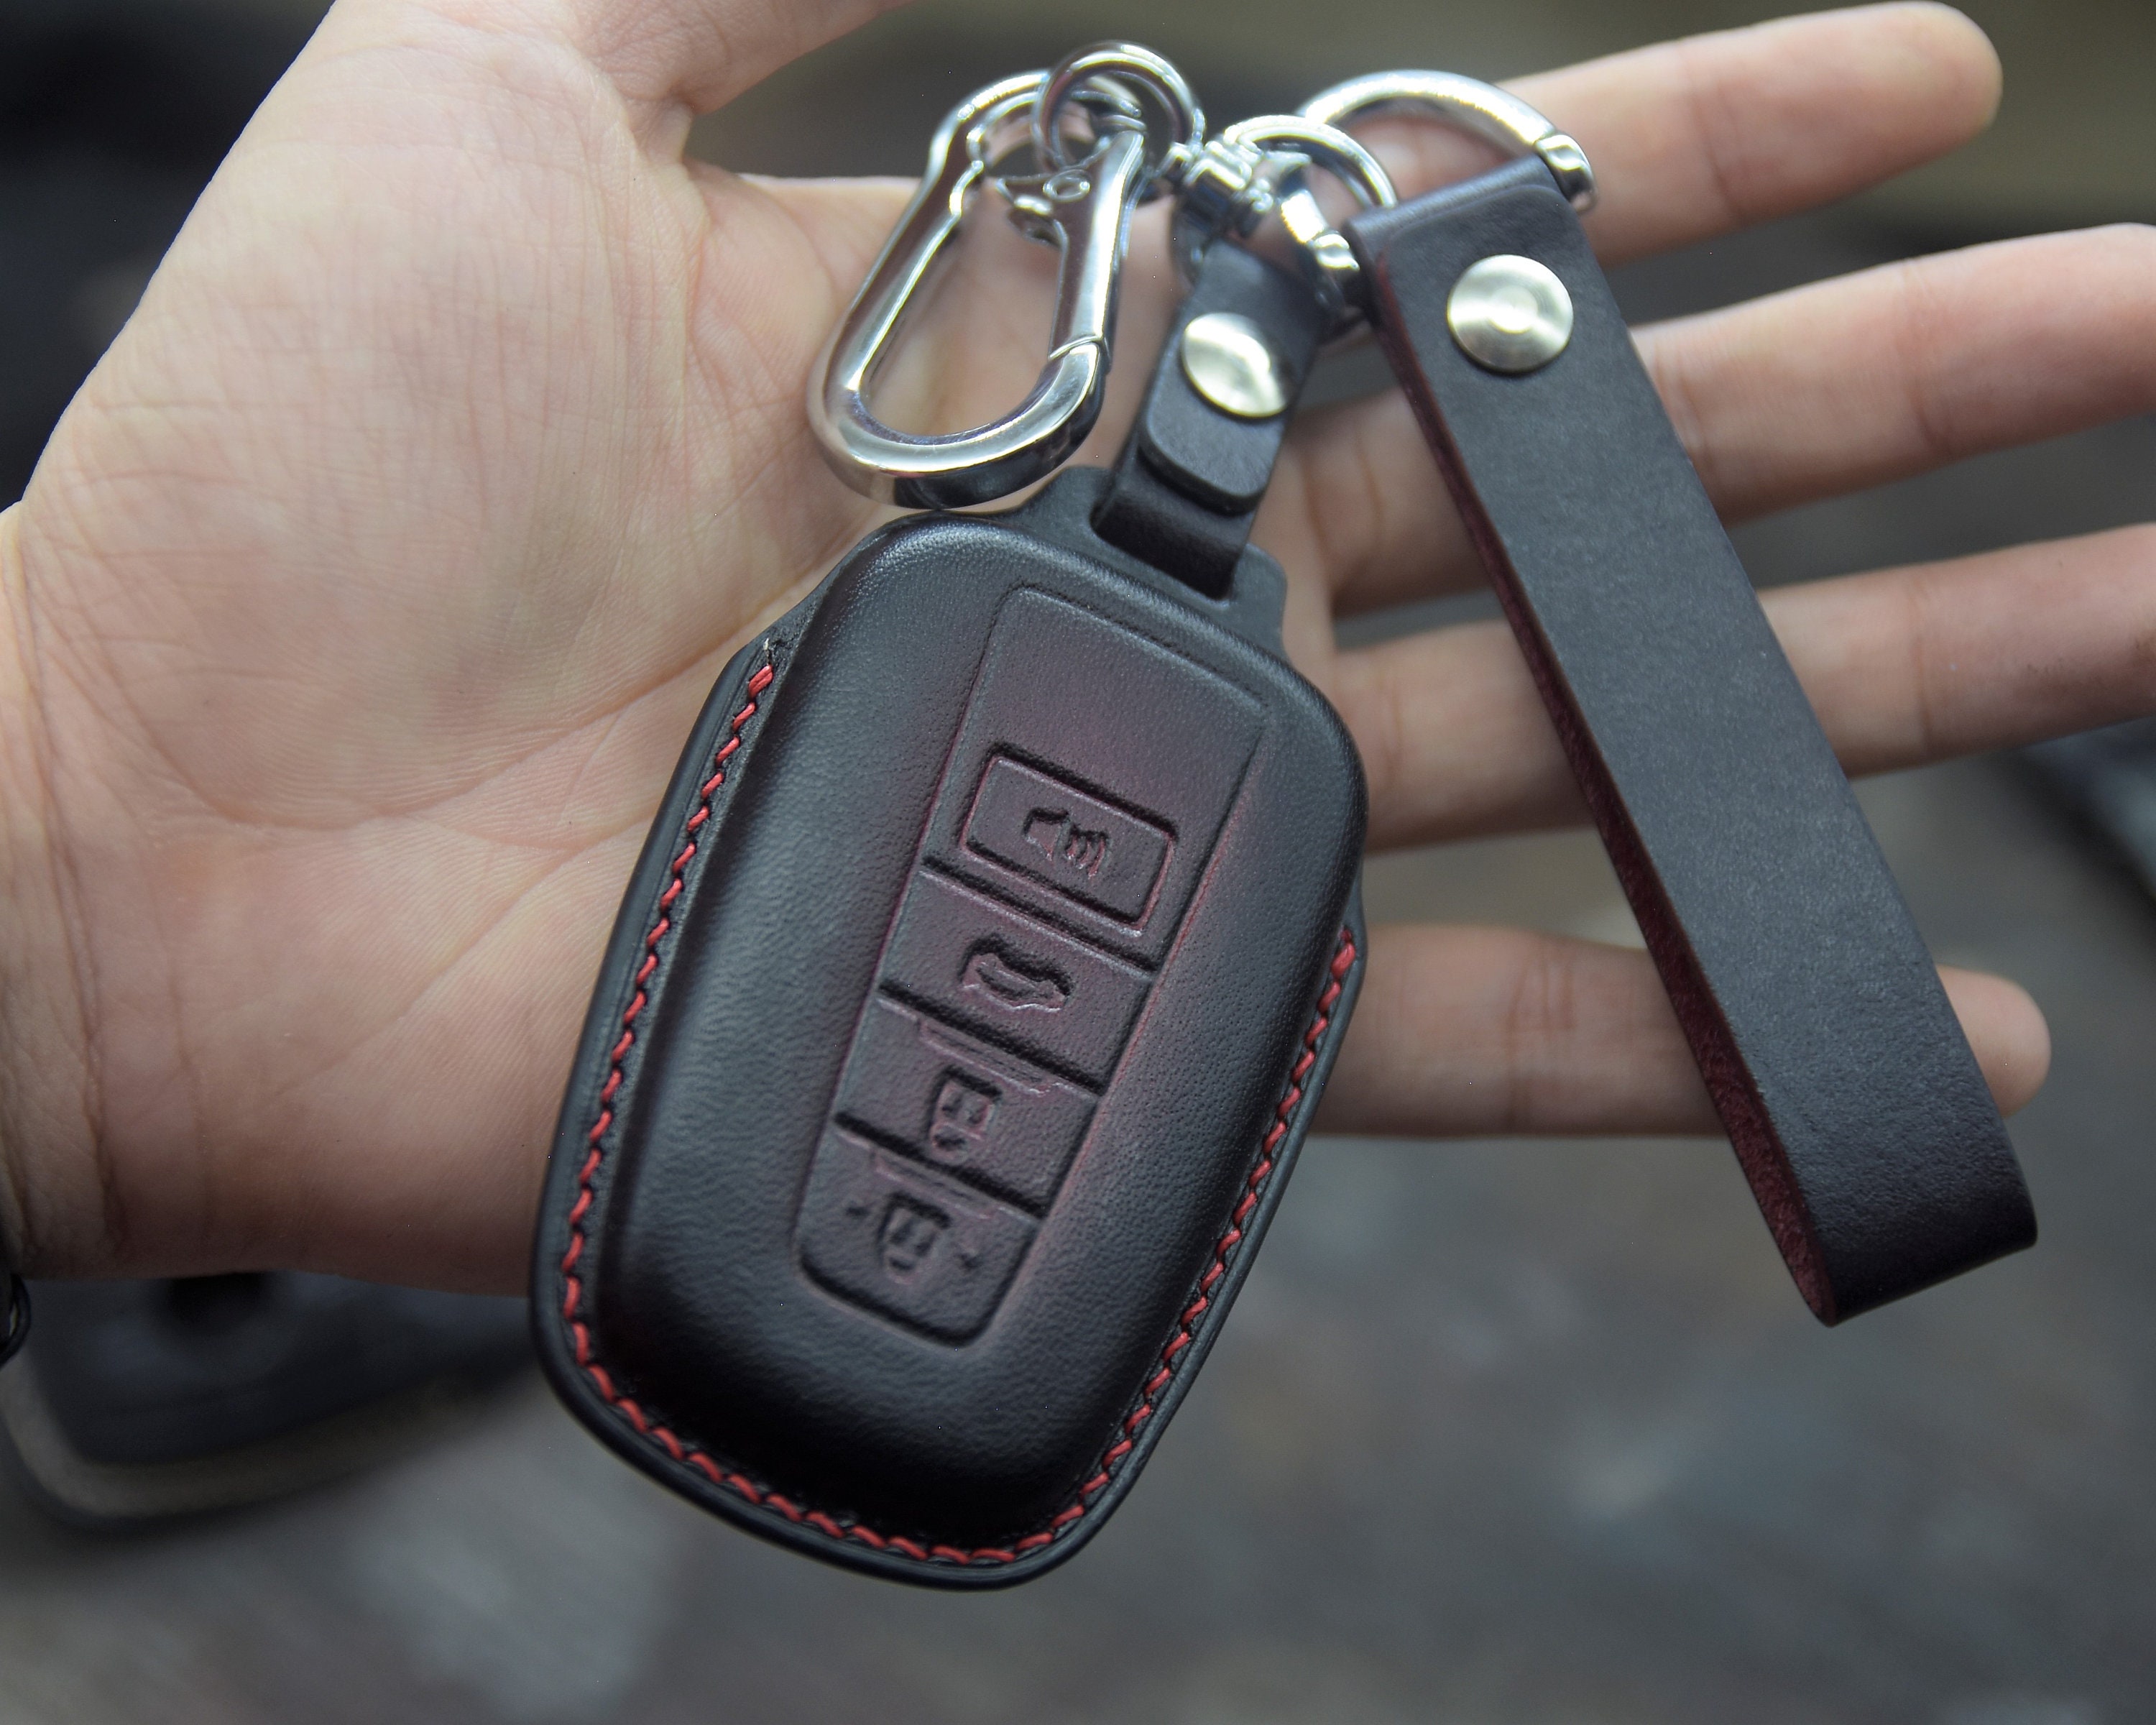 Toyota hot style with key,#cardtuff #carkeyfob buy key case get